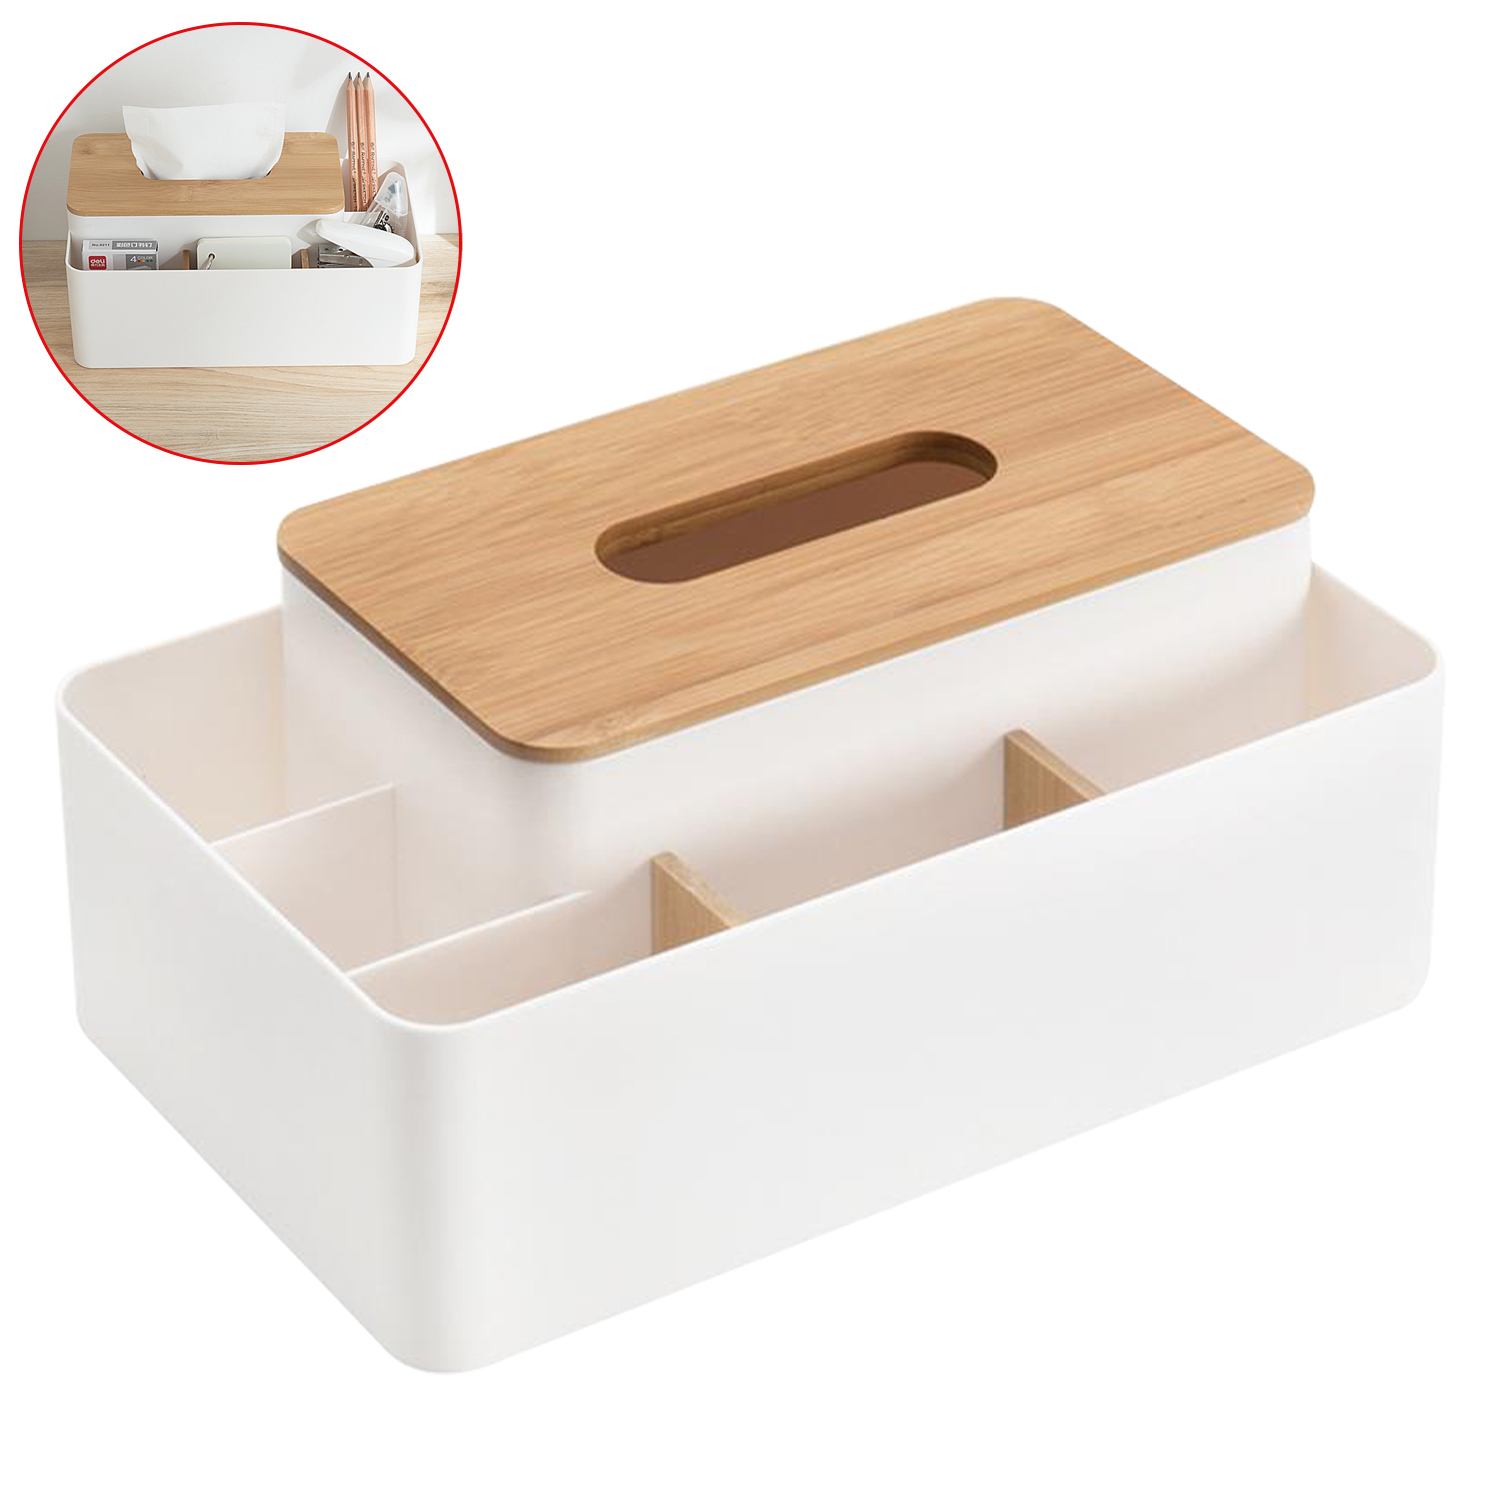 Tissue Box Remote Control Holder Makeup Cosmetic Storage Box Napkin Paper Container Desktop Organizer Home Decoration Tools